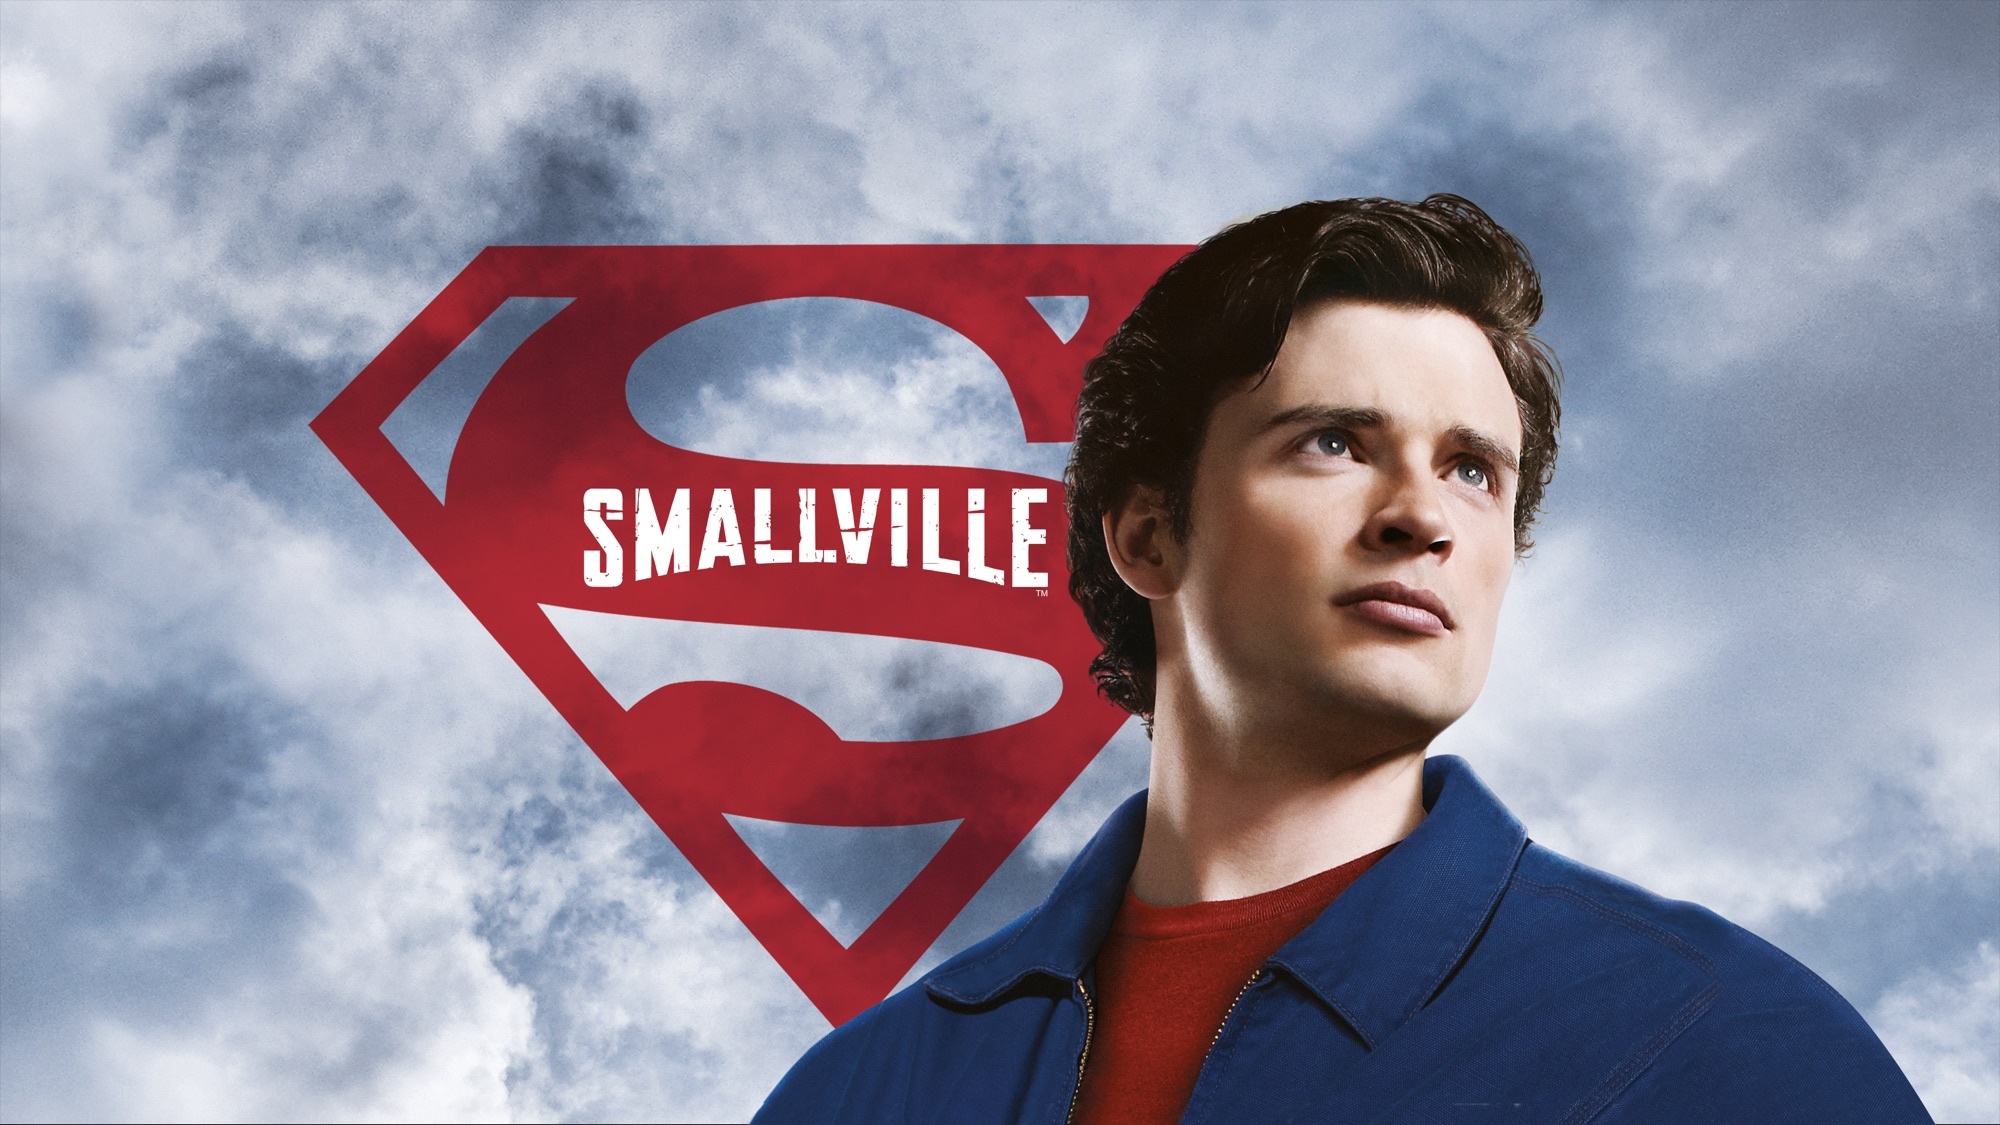 Smallville wallpaper, Background image, 2000x1130 HD Desktop